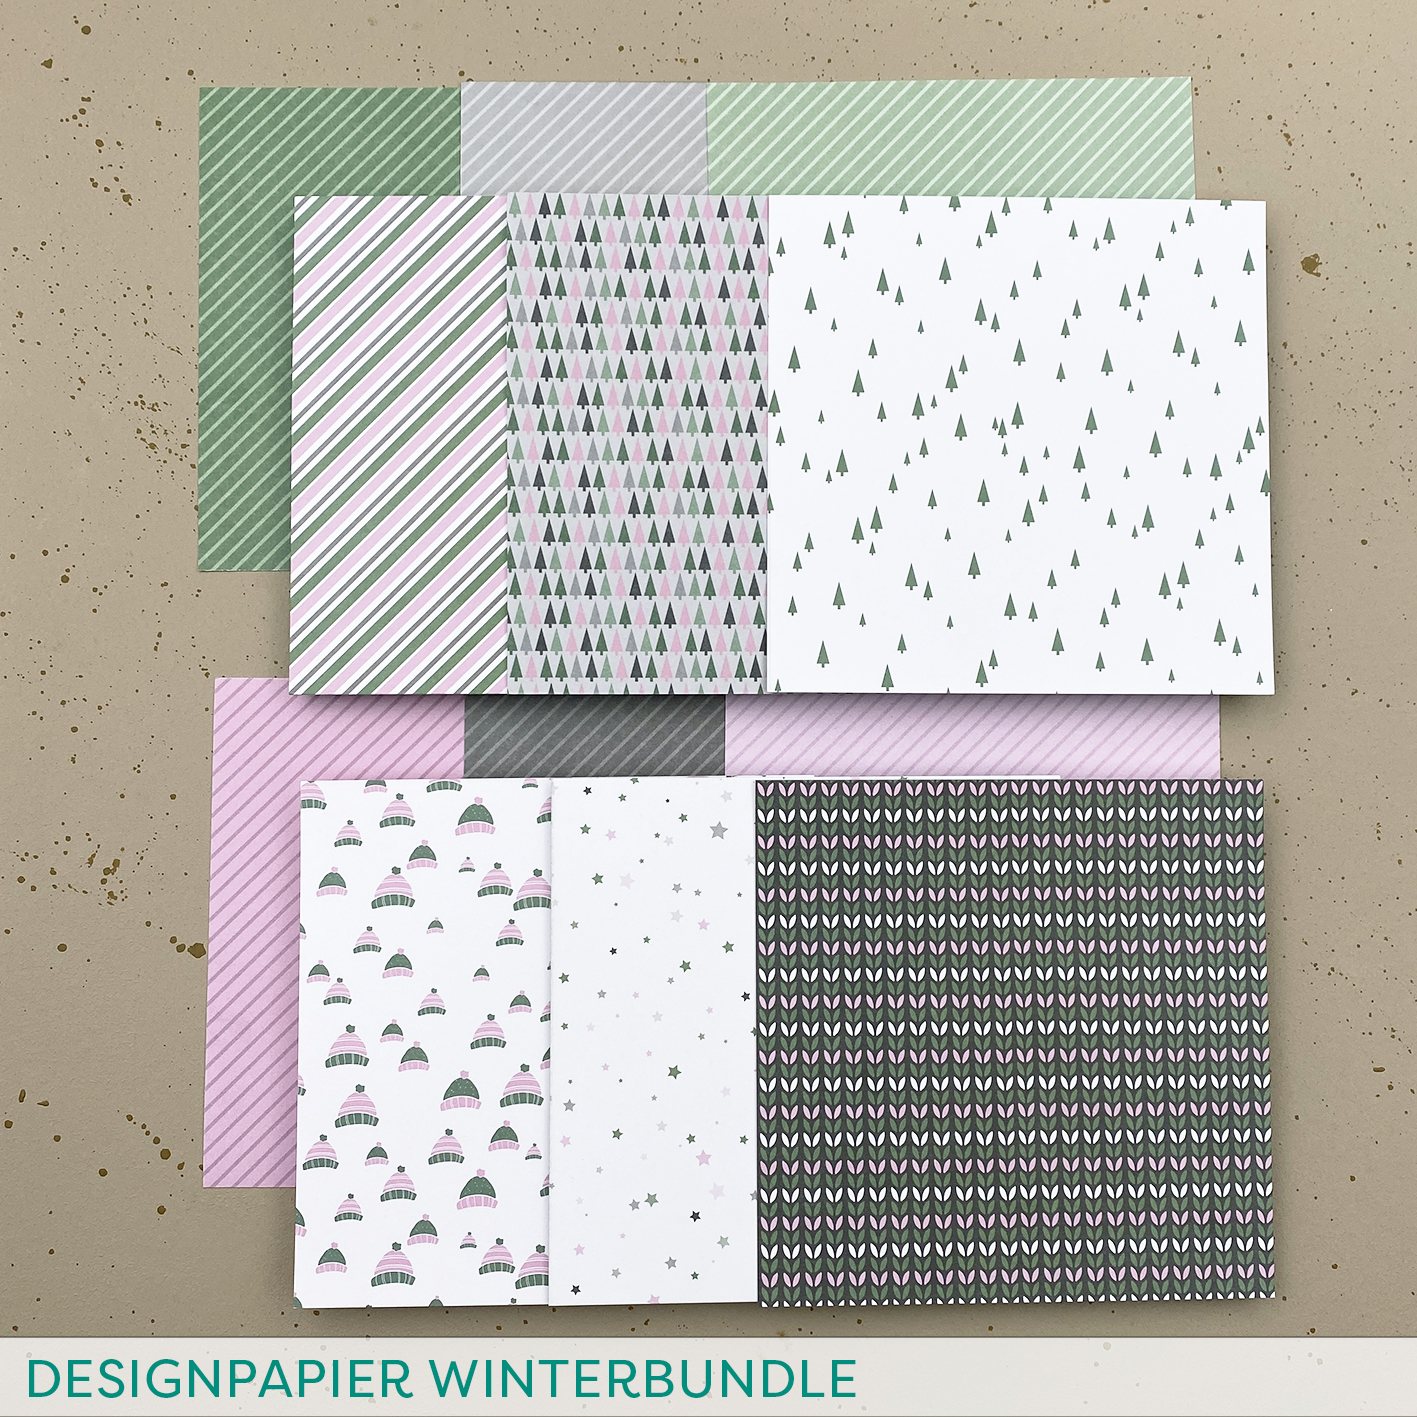 Designpapier Winterbundle